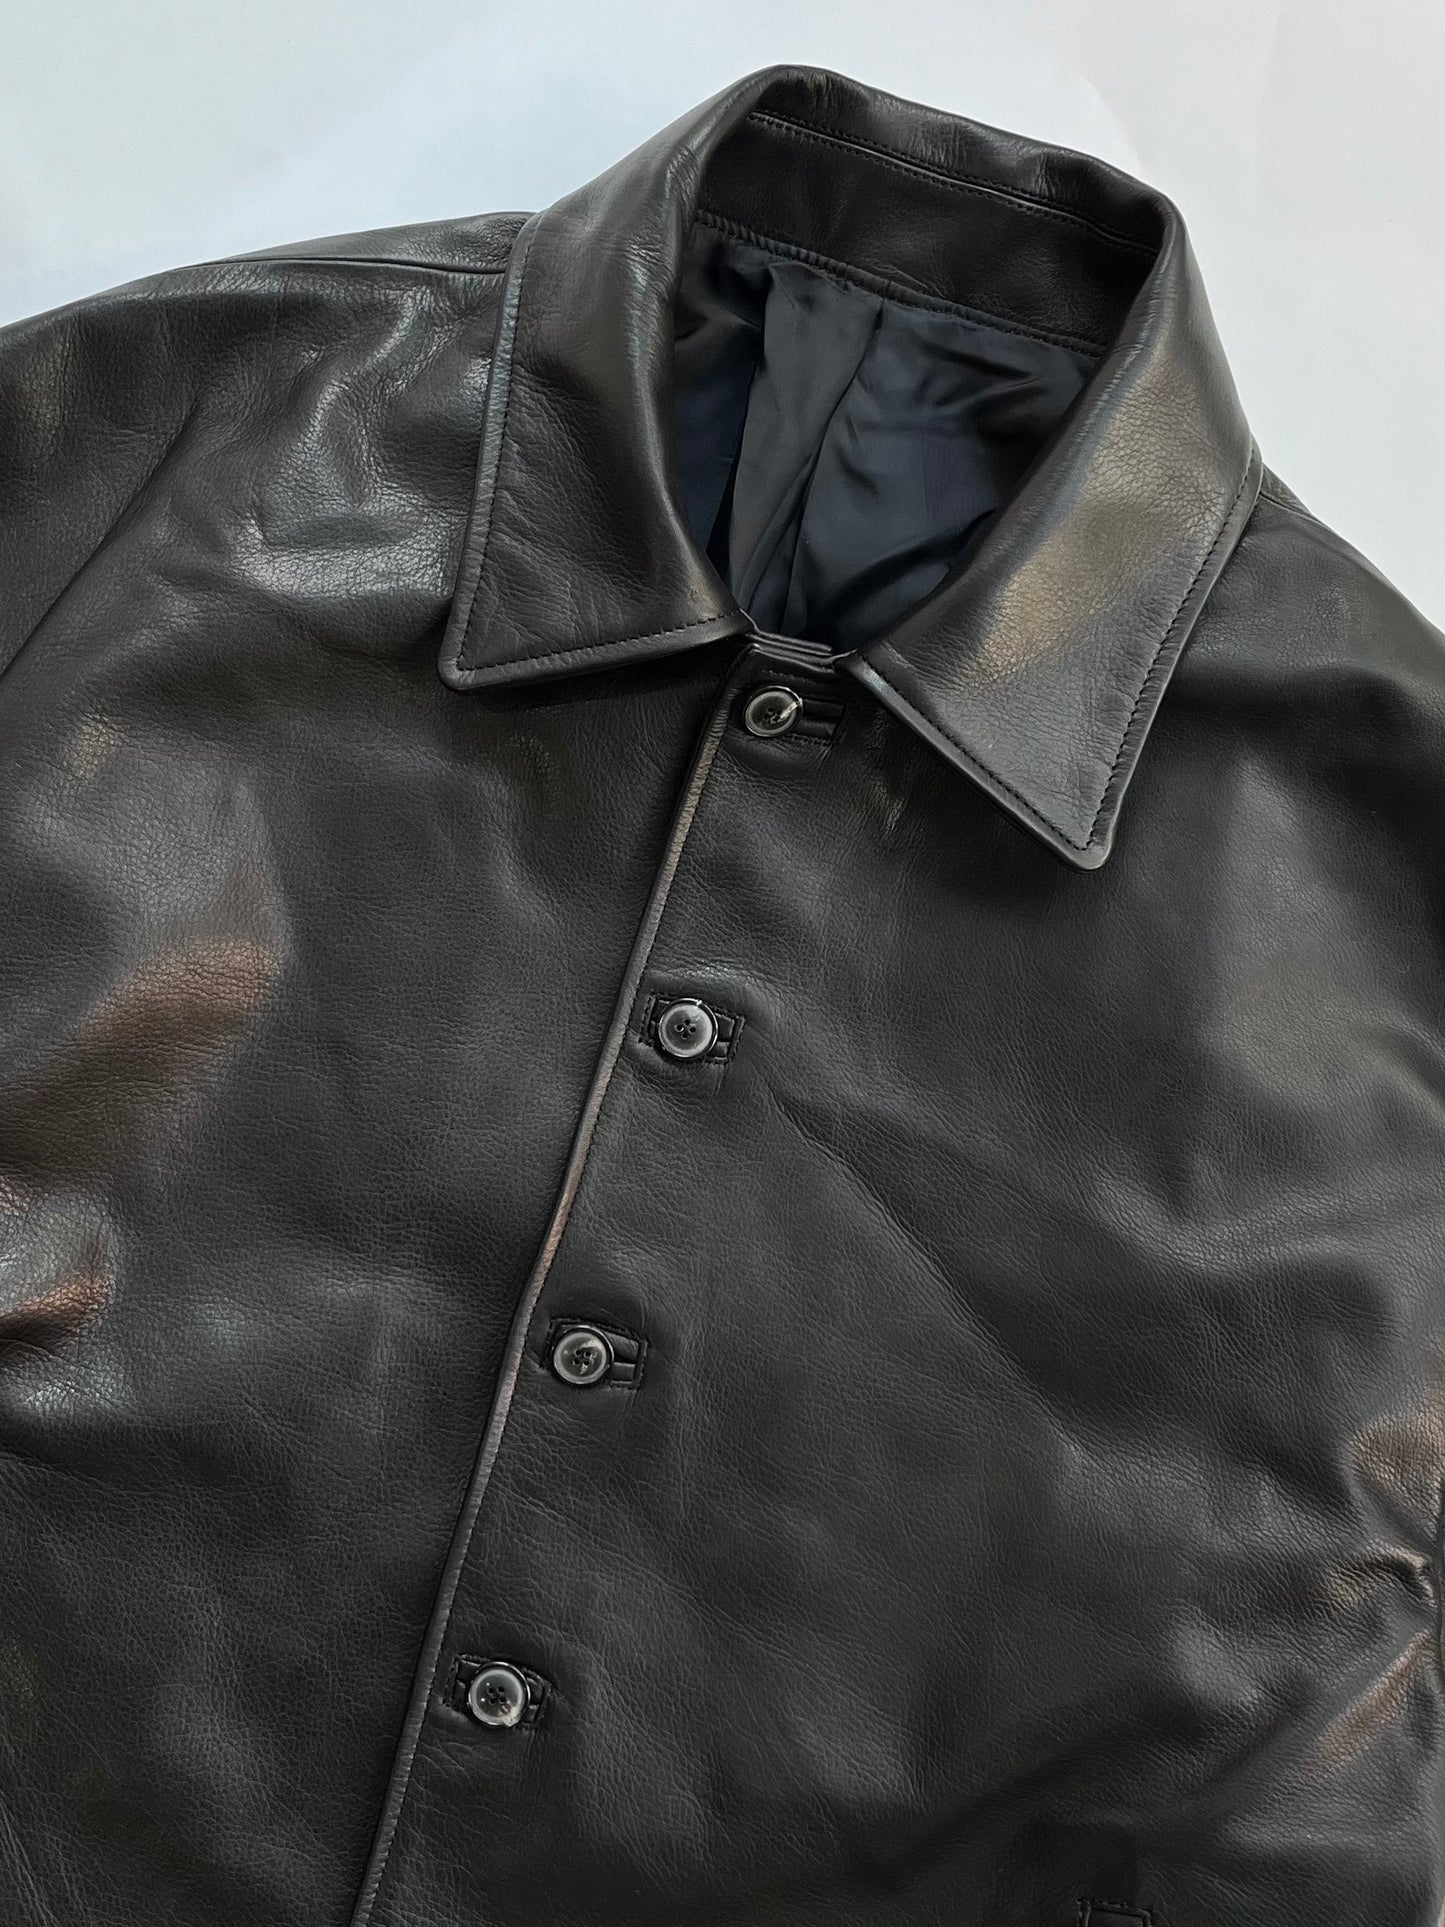 ［YOKO SAKAMOTO] Leather Coach Jacket